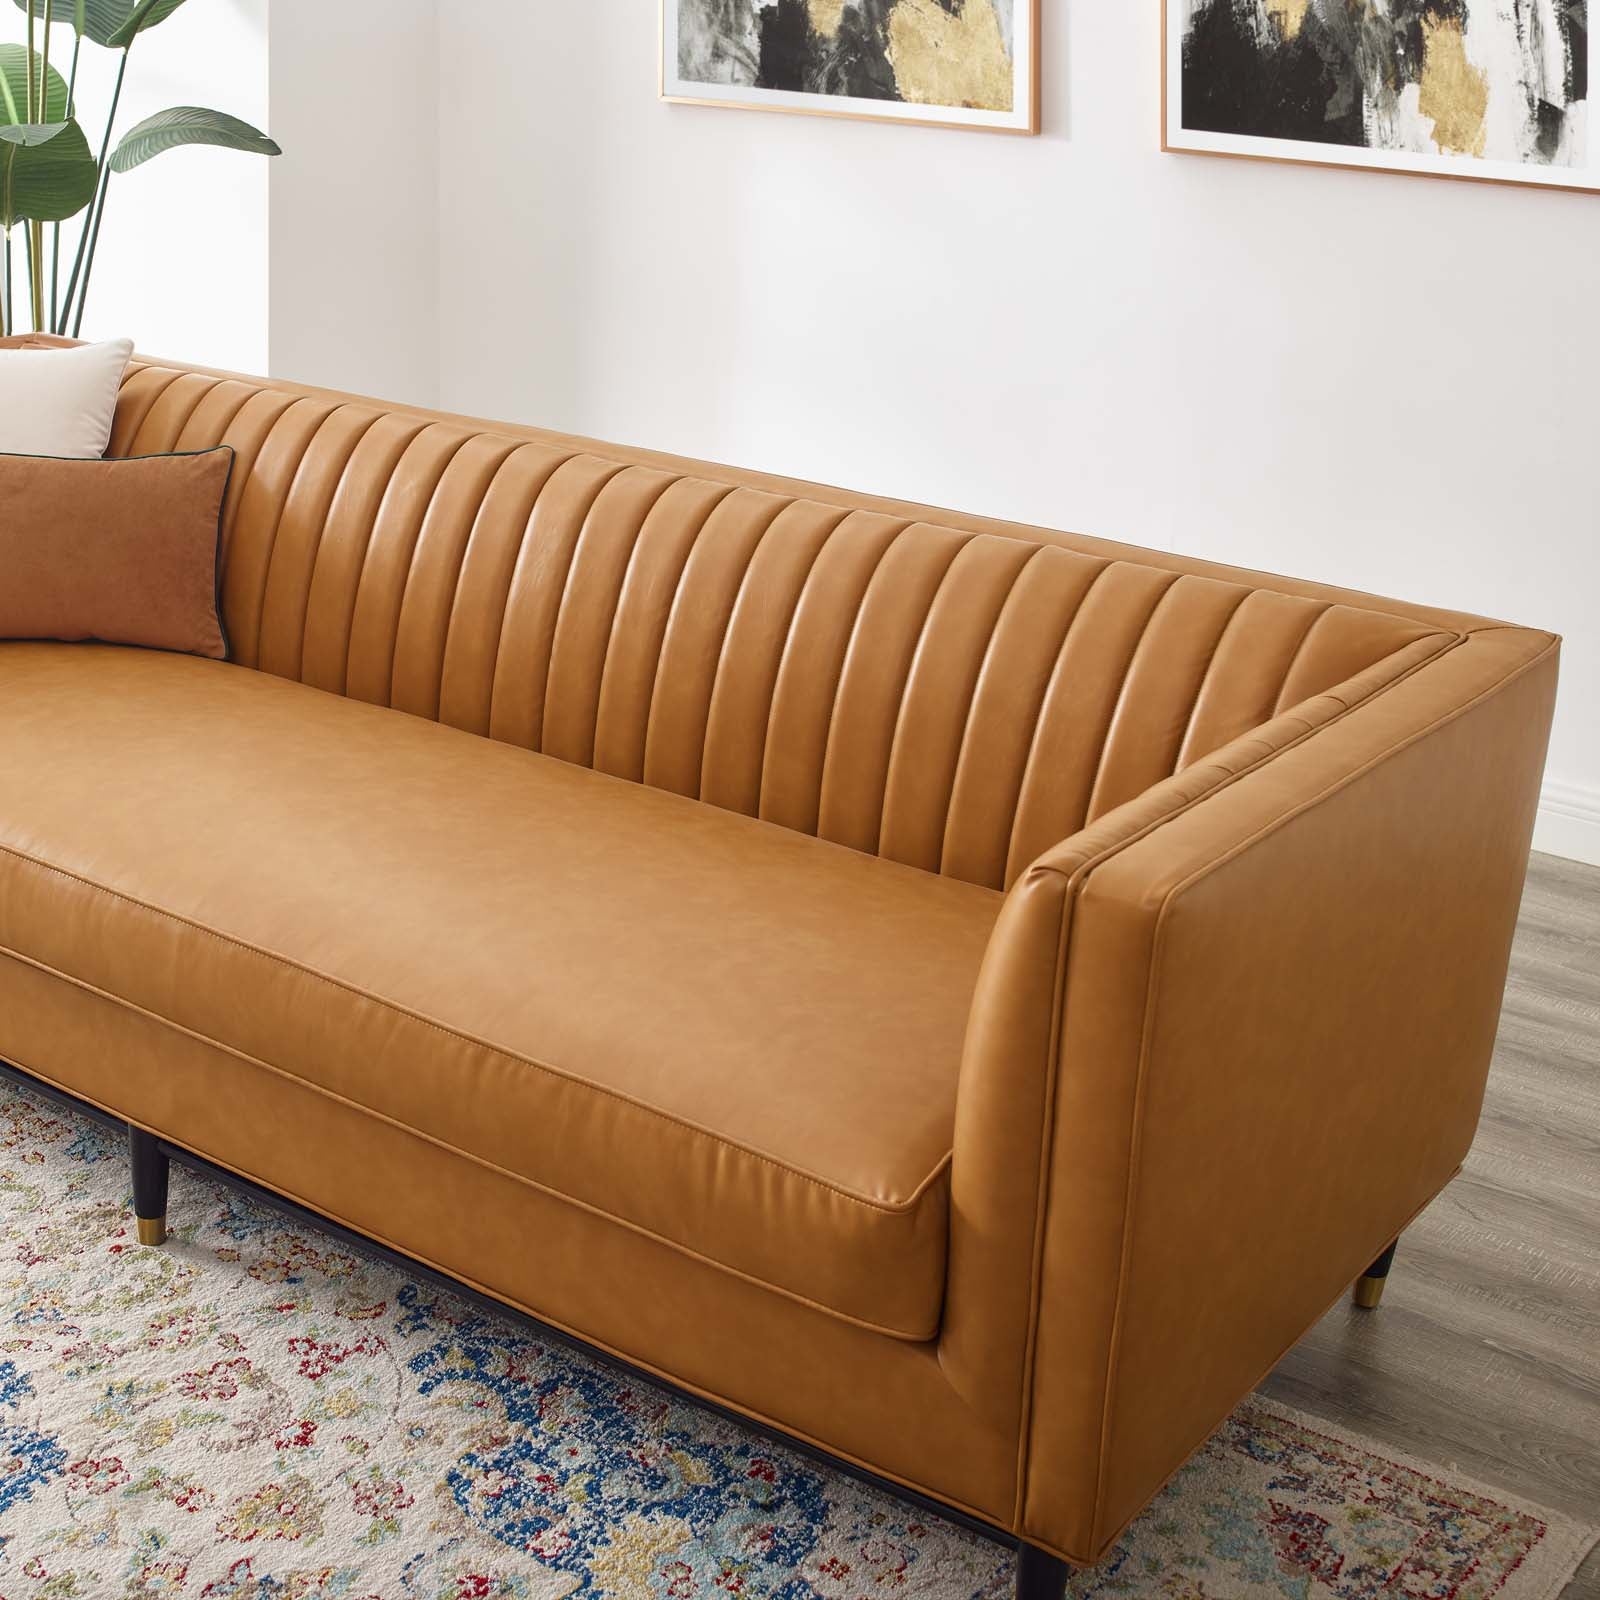 Devote Channel Tufted Vegan Leather Sofa - East Shore Modern Home Furnishings